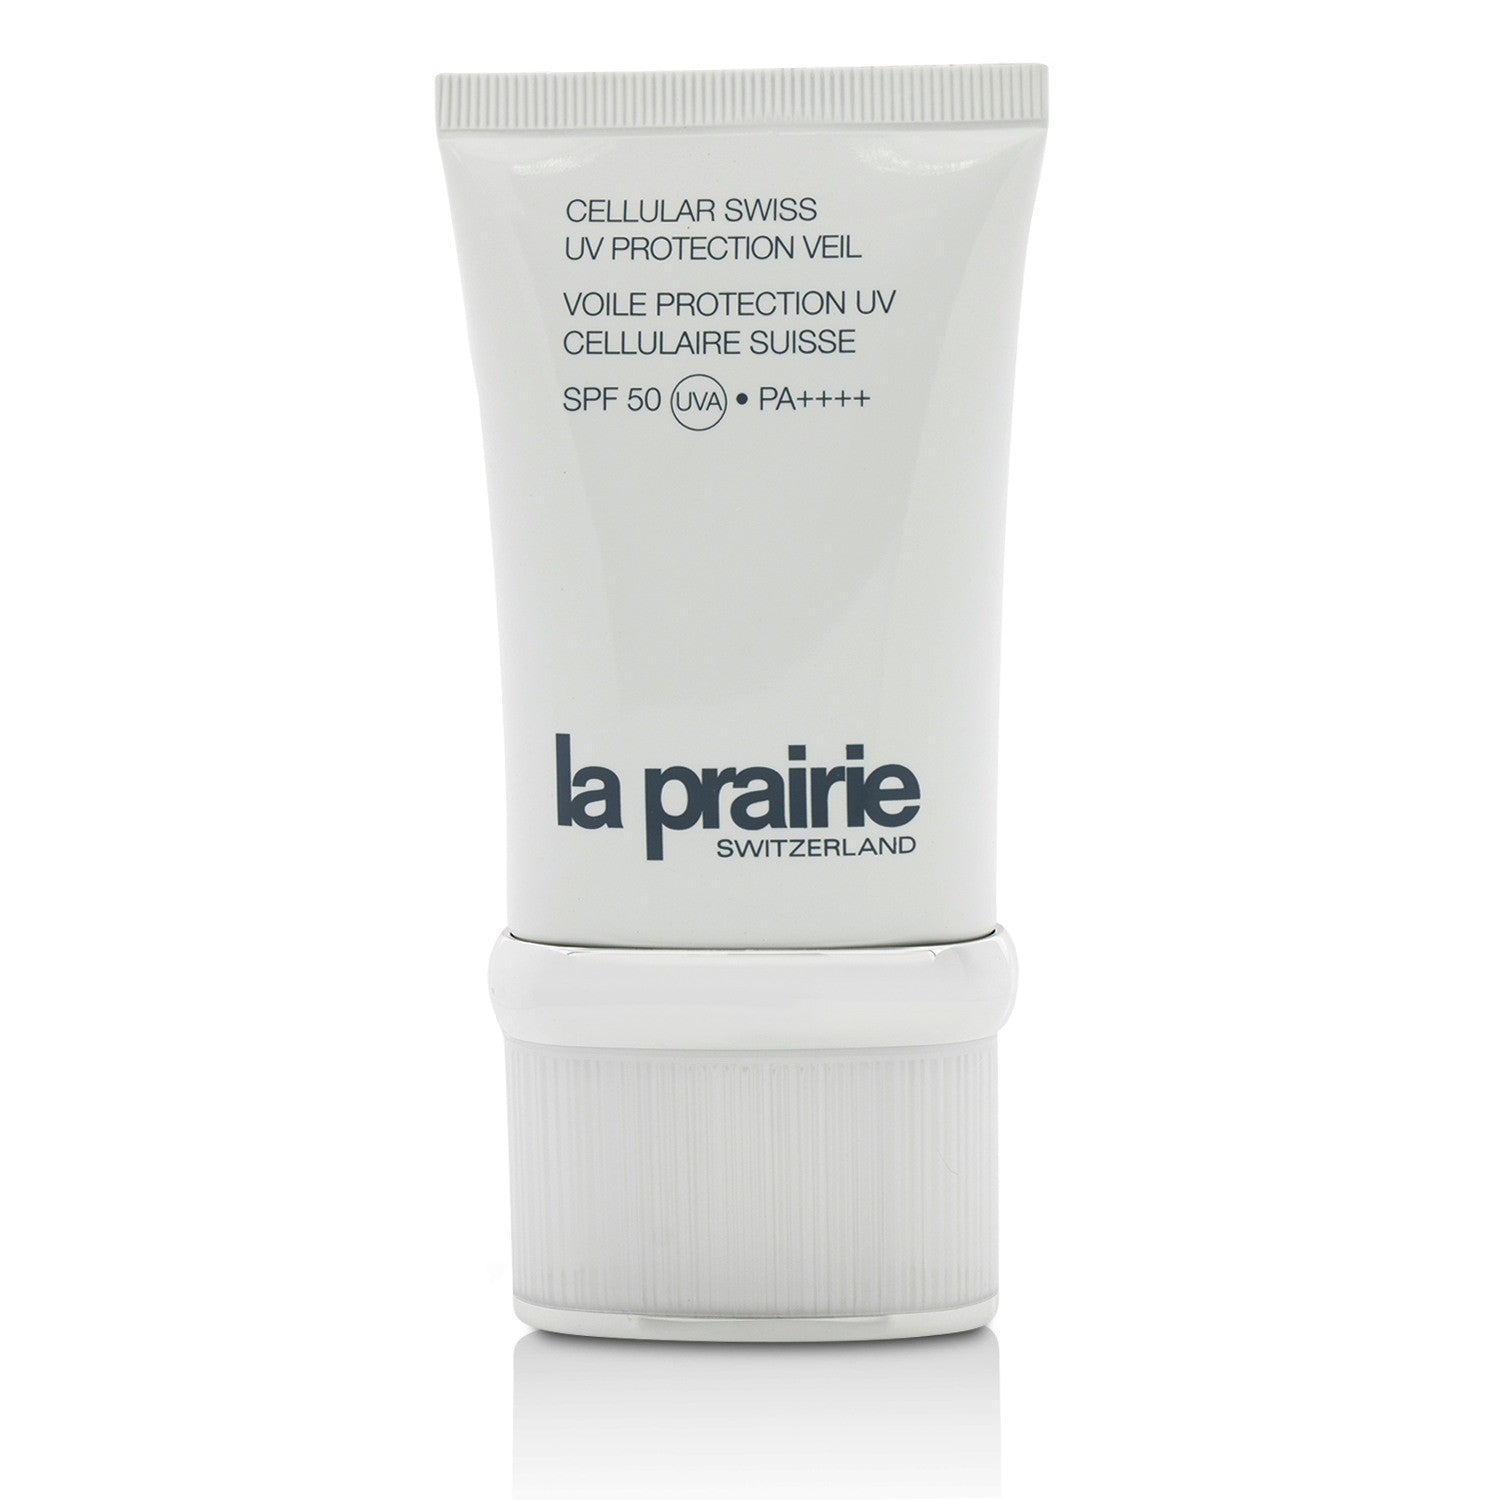 LA PRAIRIE - Cellular Swiss UV Protection Veil SPF50 PA+ - 50ml/1.7oz 3P's Inclusive Beauty